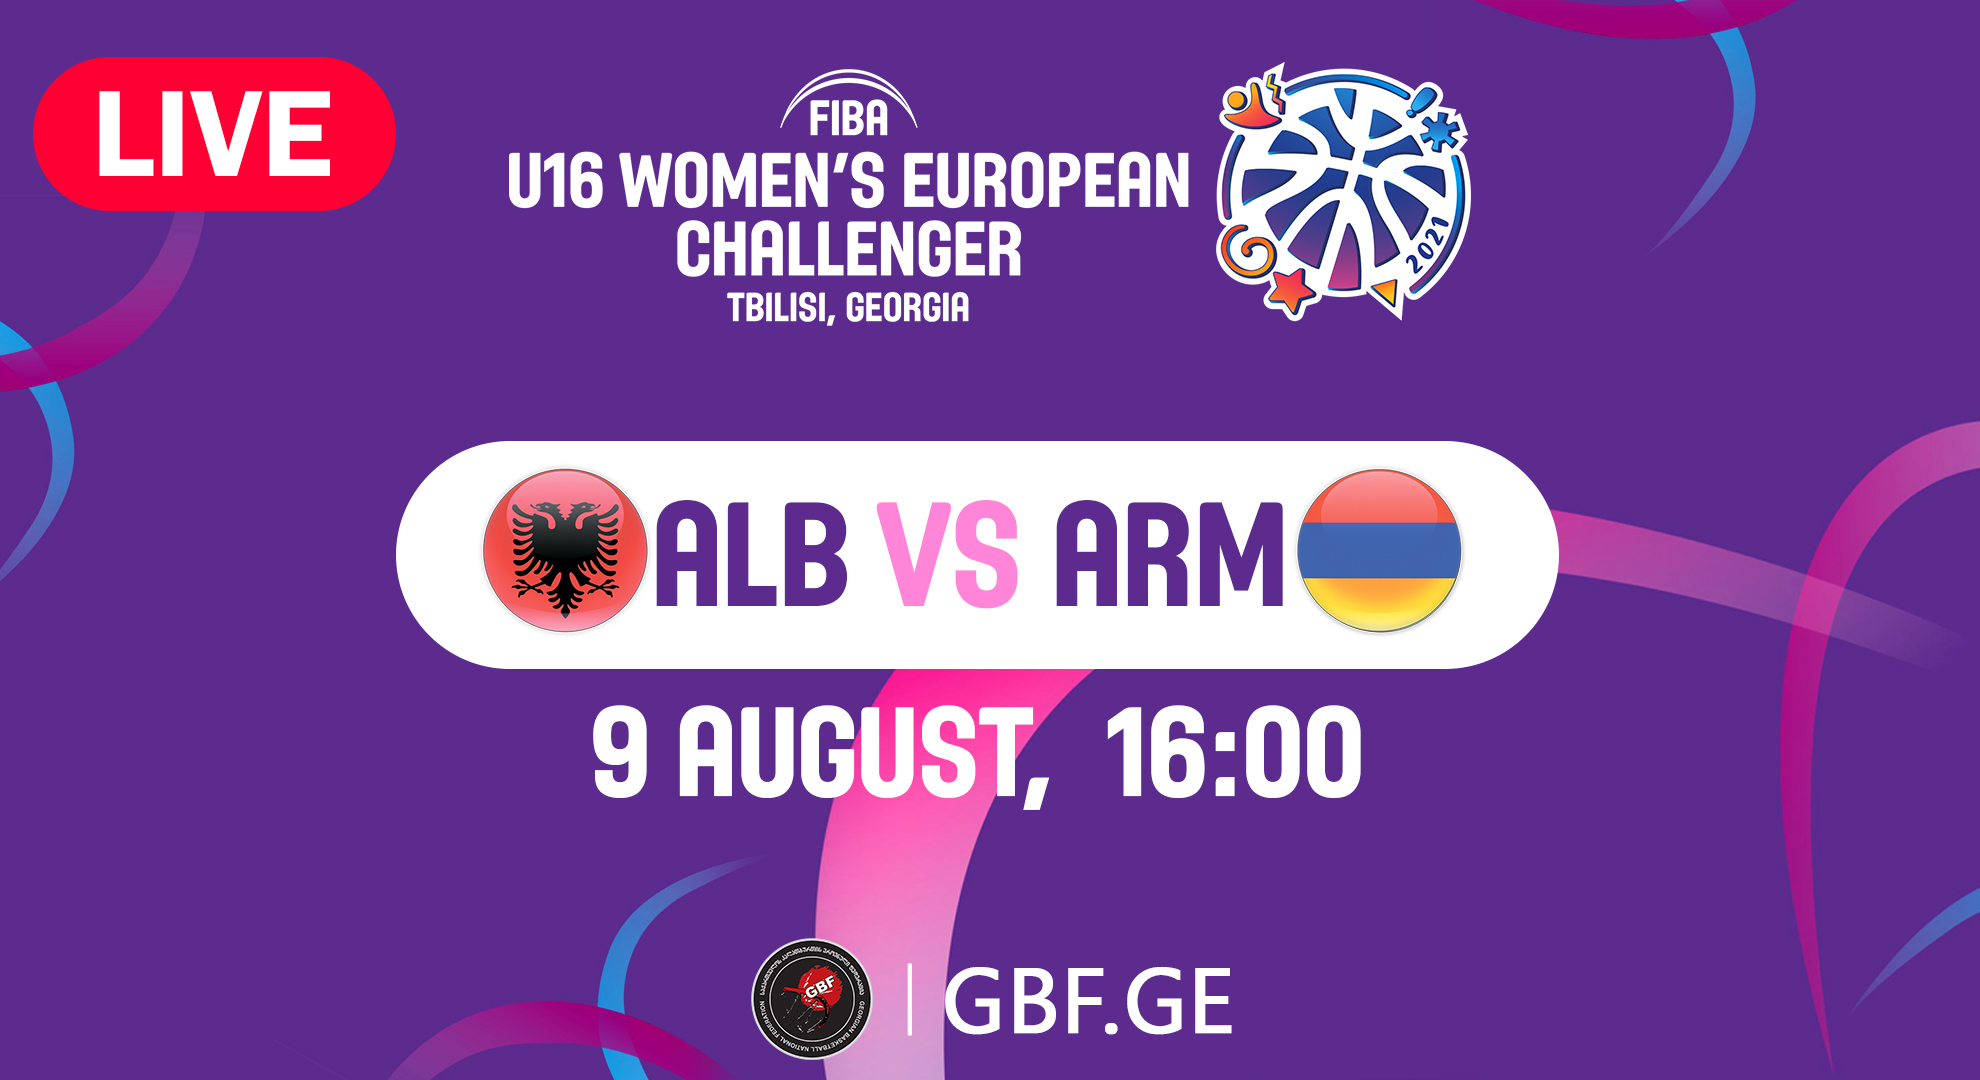 LIVE! Albania VS Armenia #FIBAU16EUROPE